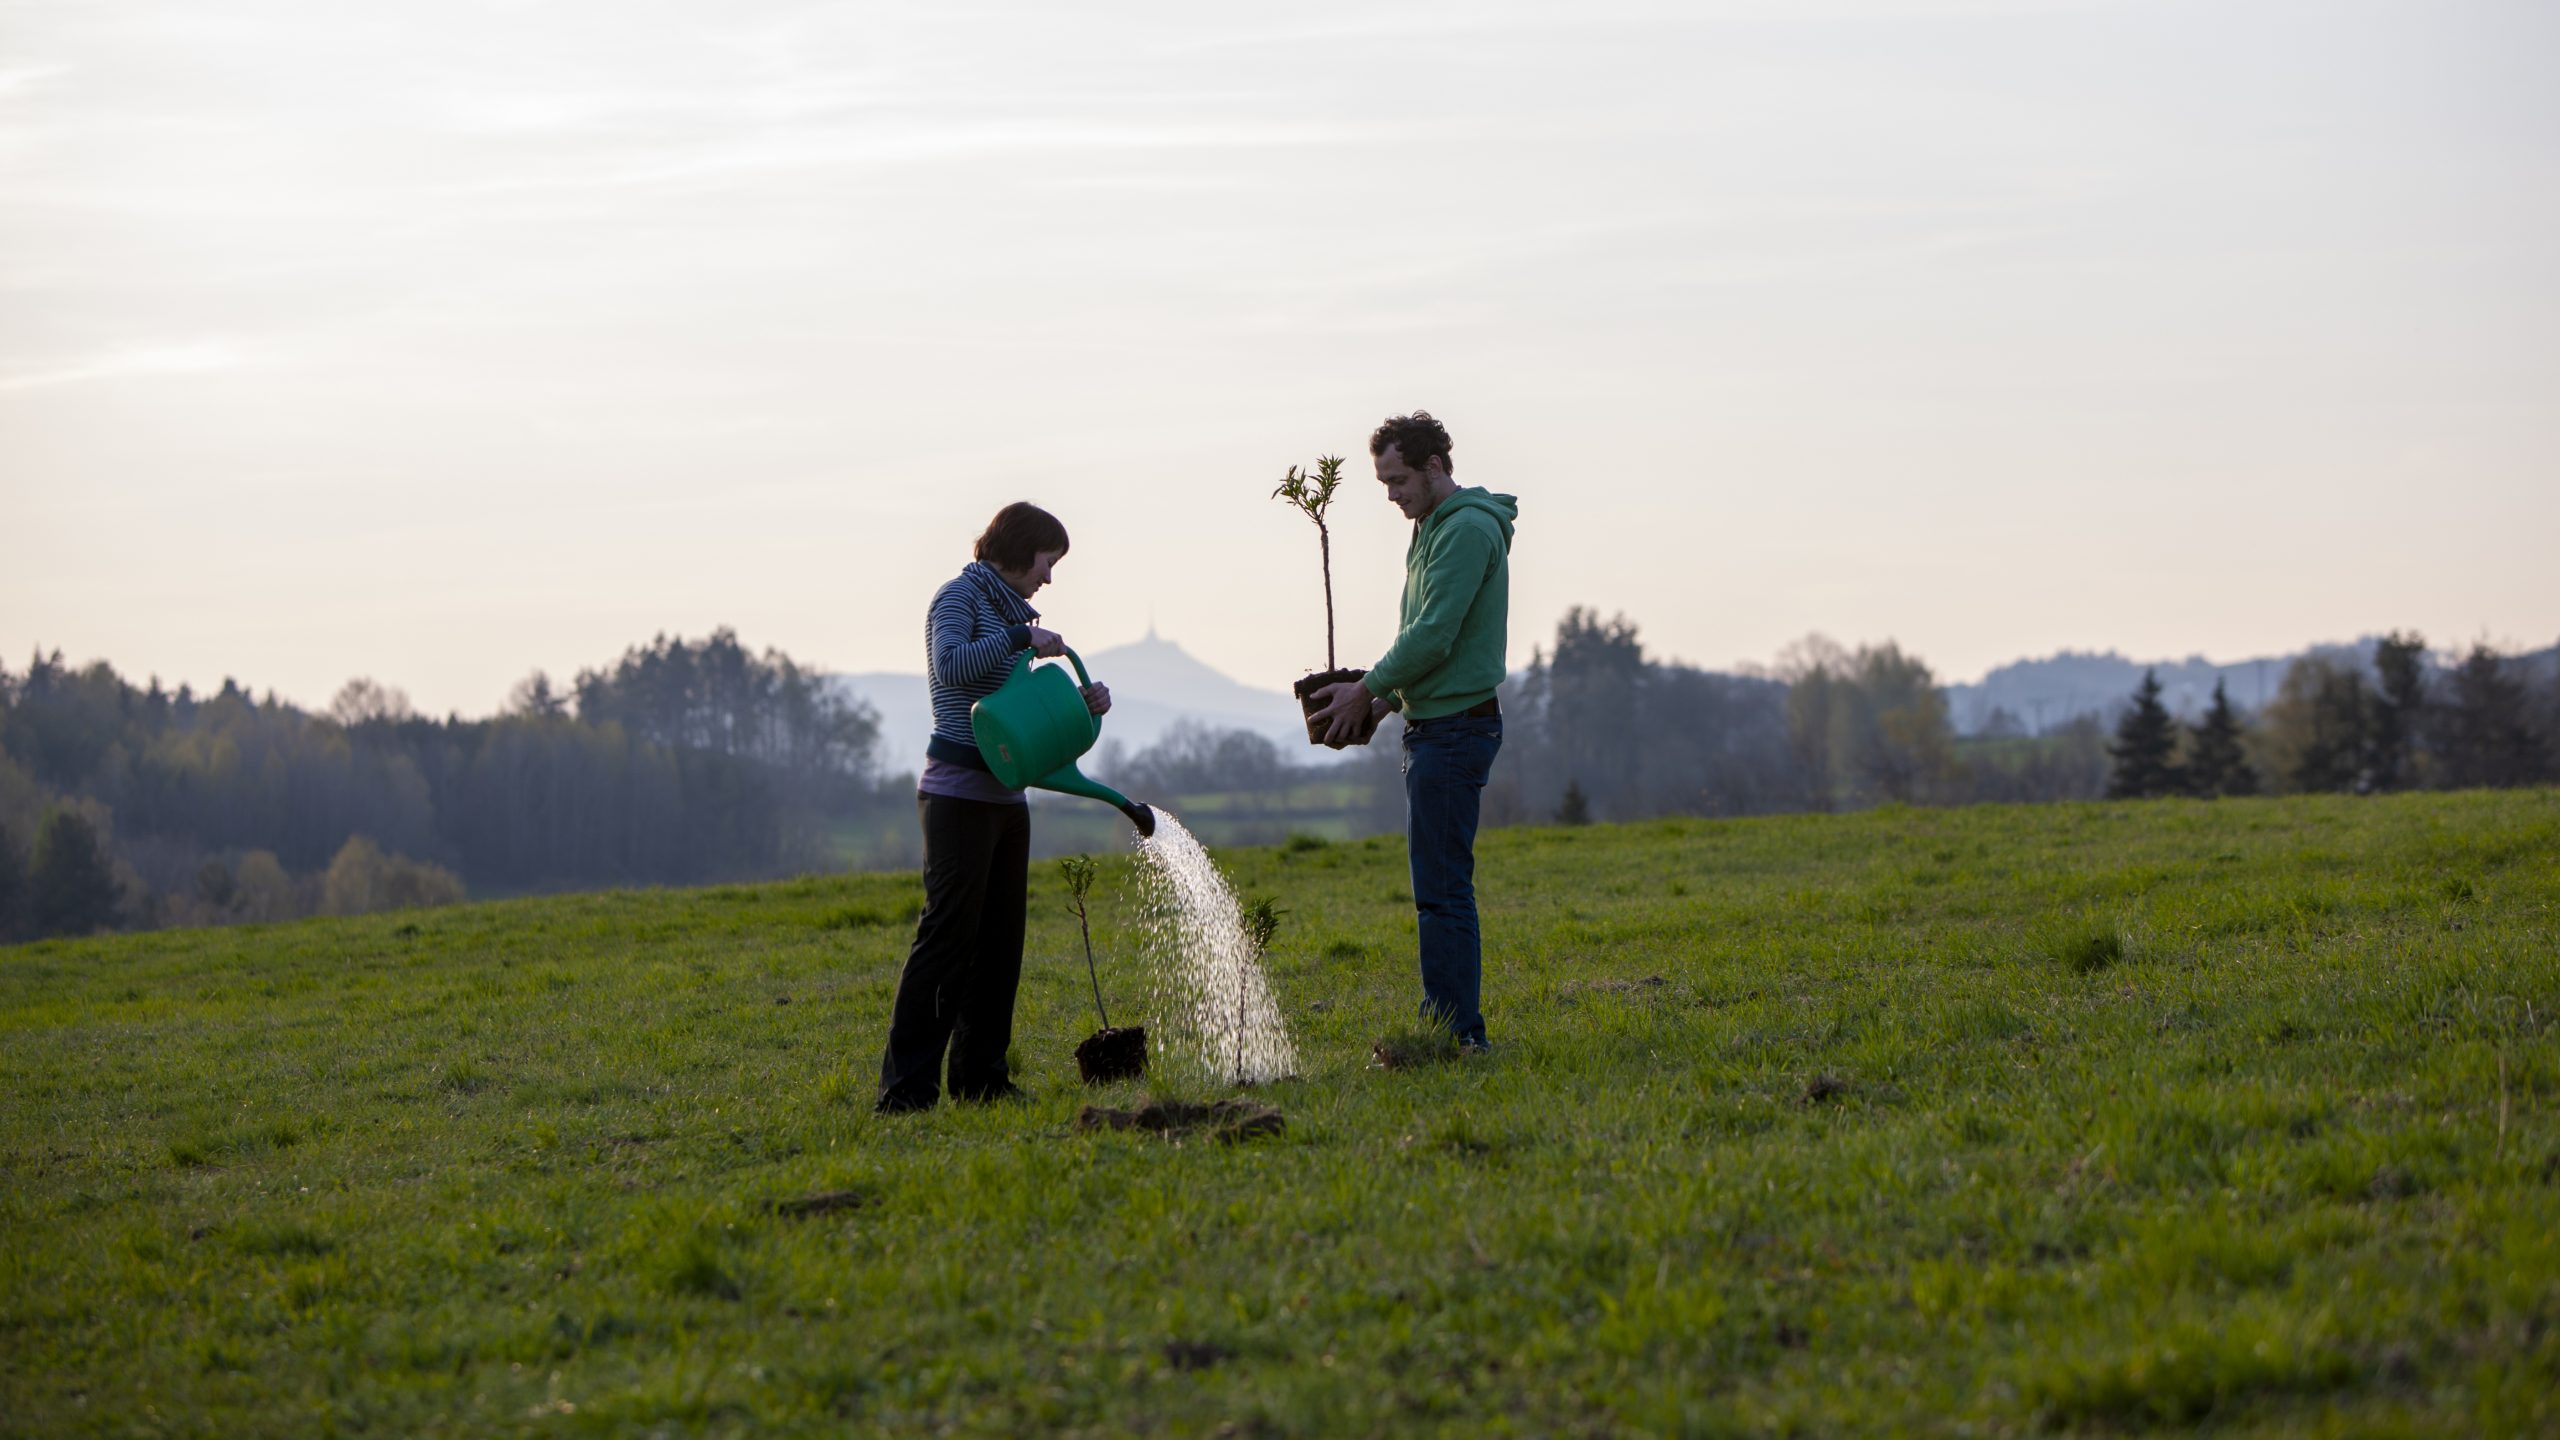 A young couple planting a tree on a grass field. Photographer Tuomas Harjumaaskola.